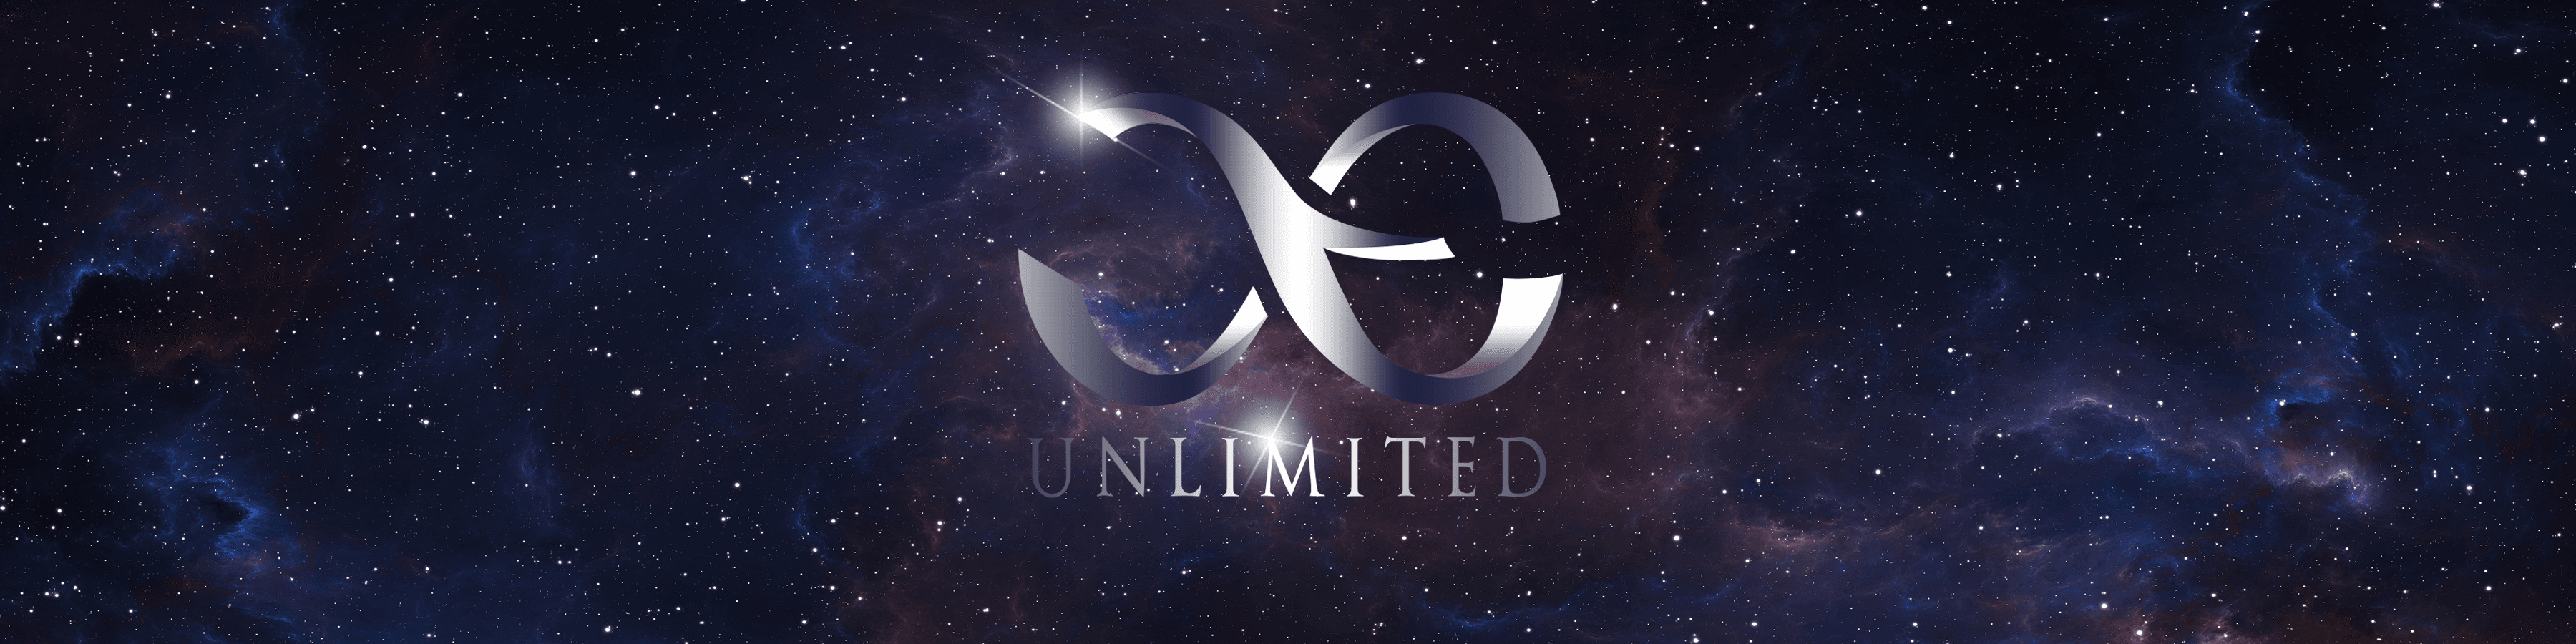 JE_Unlimited Banner